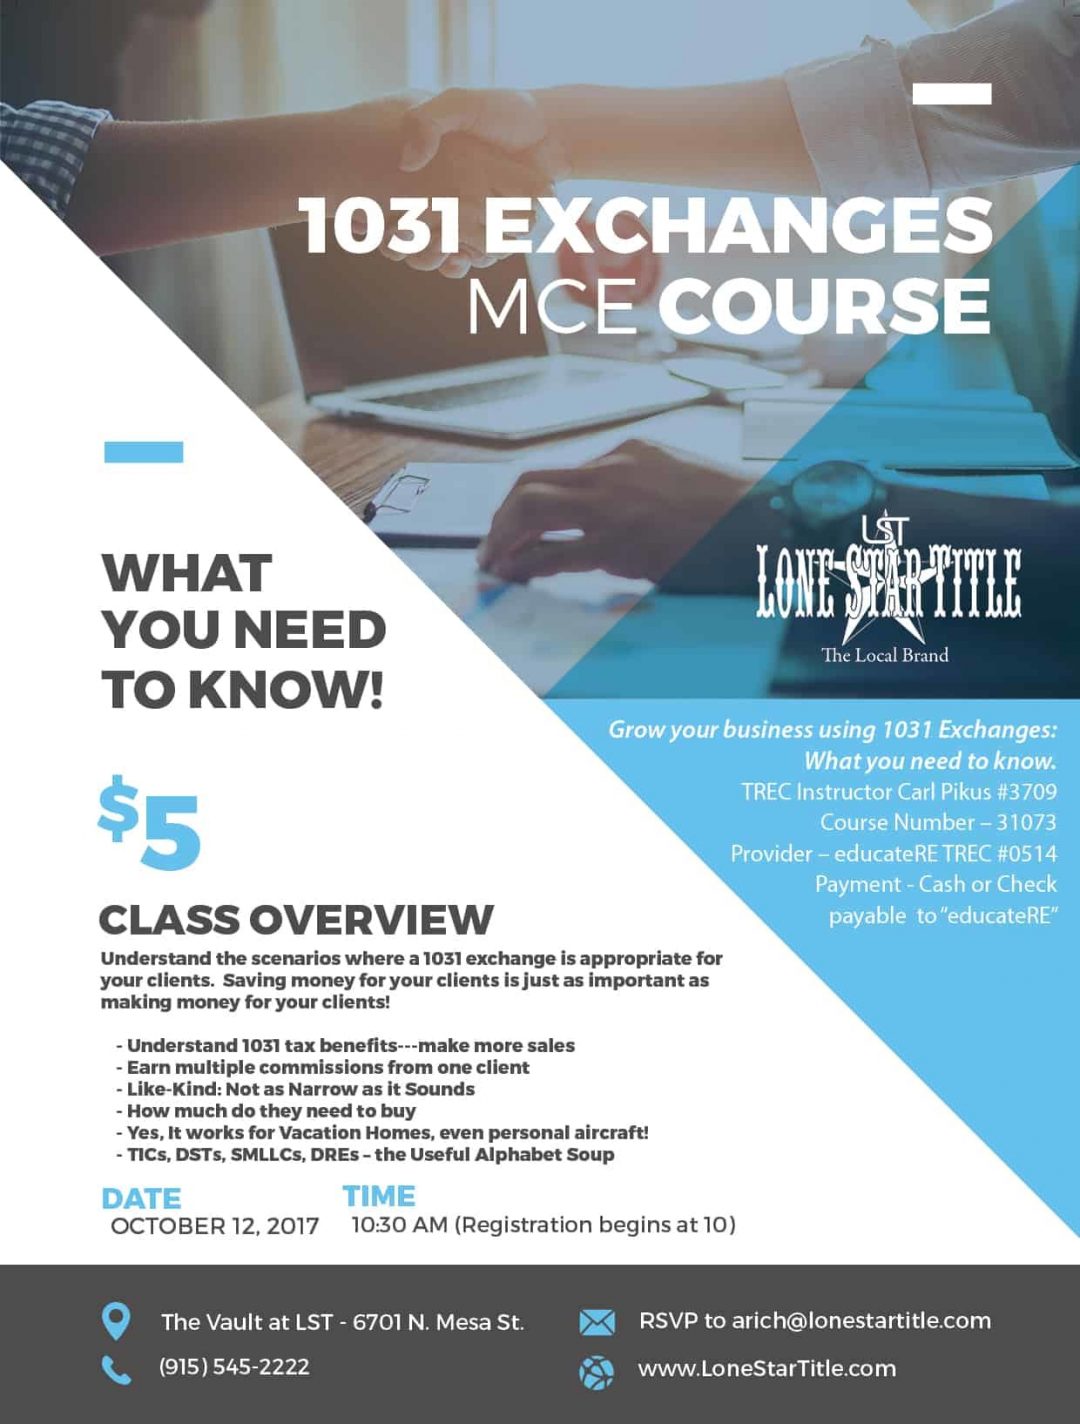 1031 Exchanges MCE Course